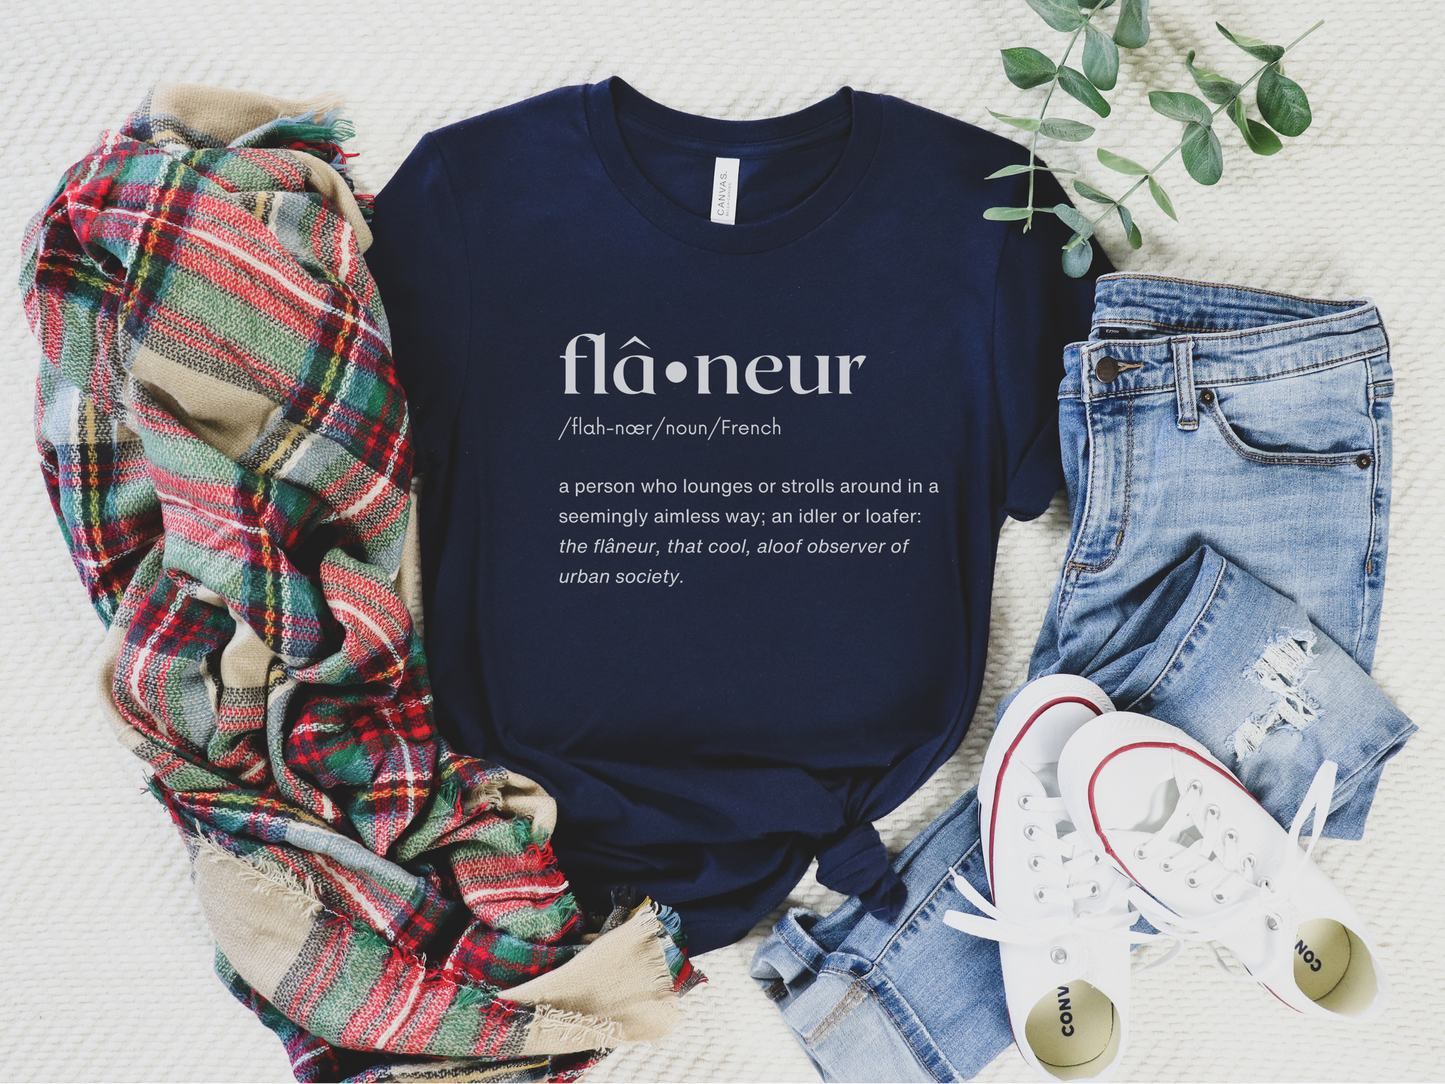 Flâneur "Wanderer" French Word T-Shirt in Navy